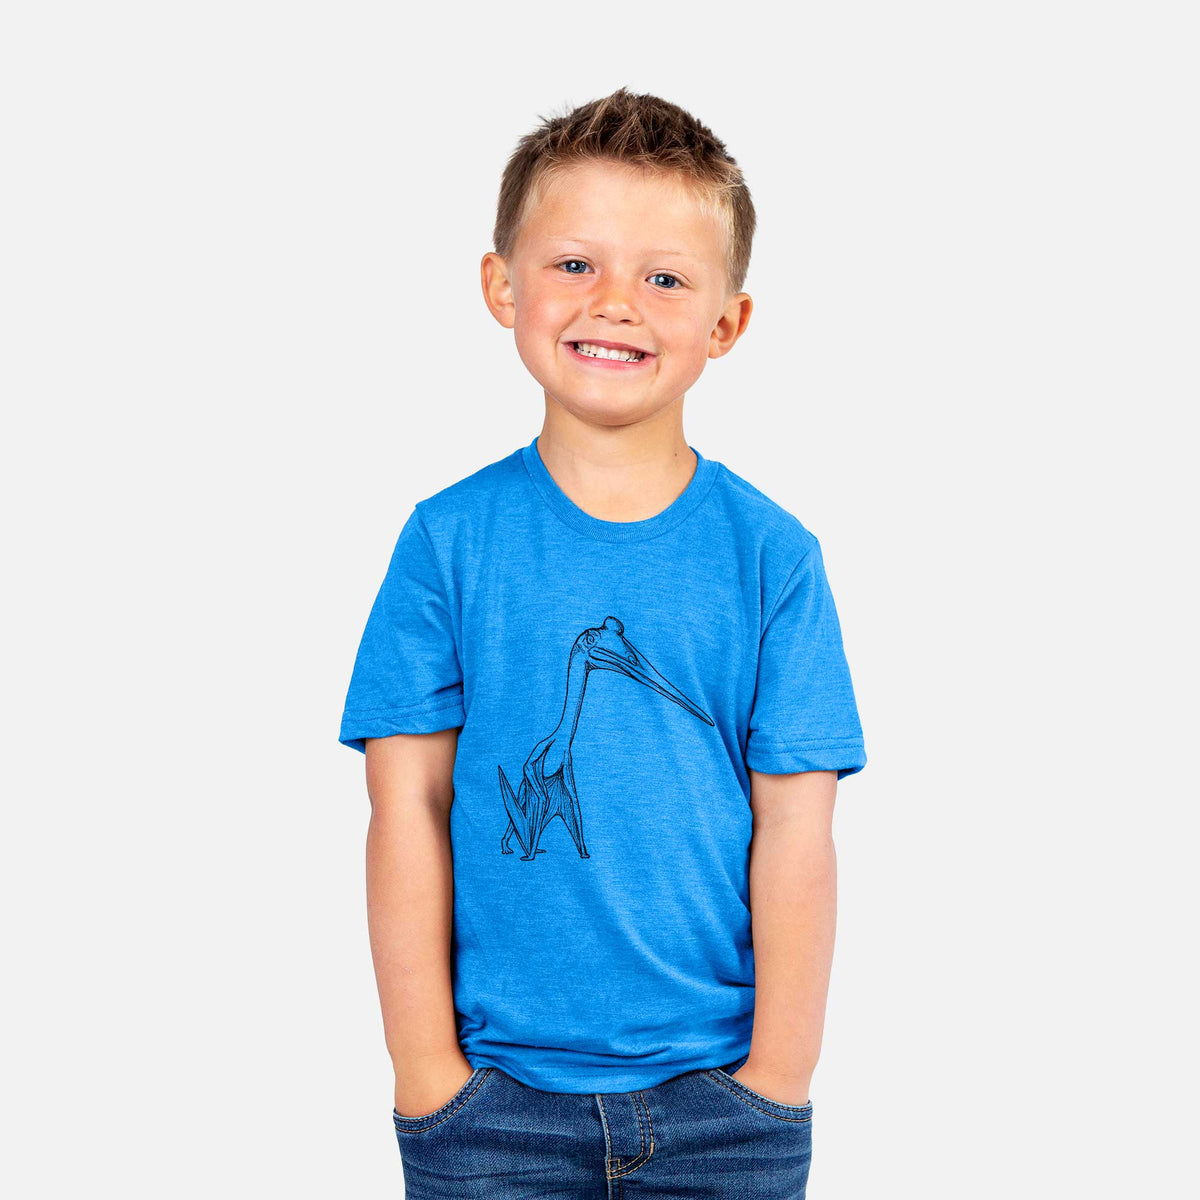 Quetzalcoatlus Northropi - Kids Shirt